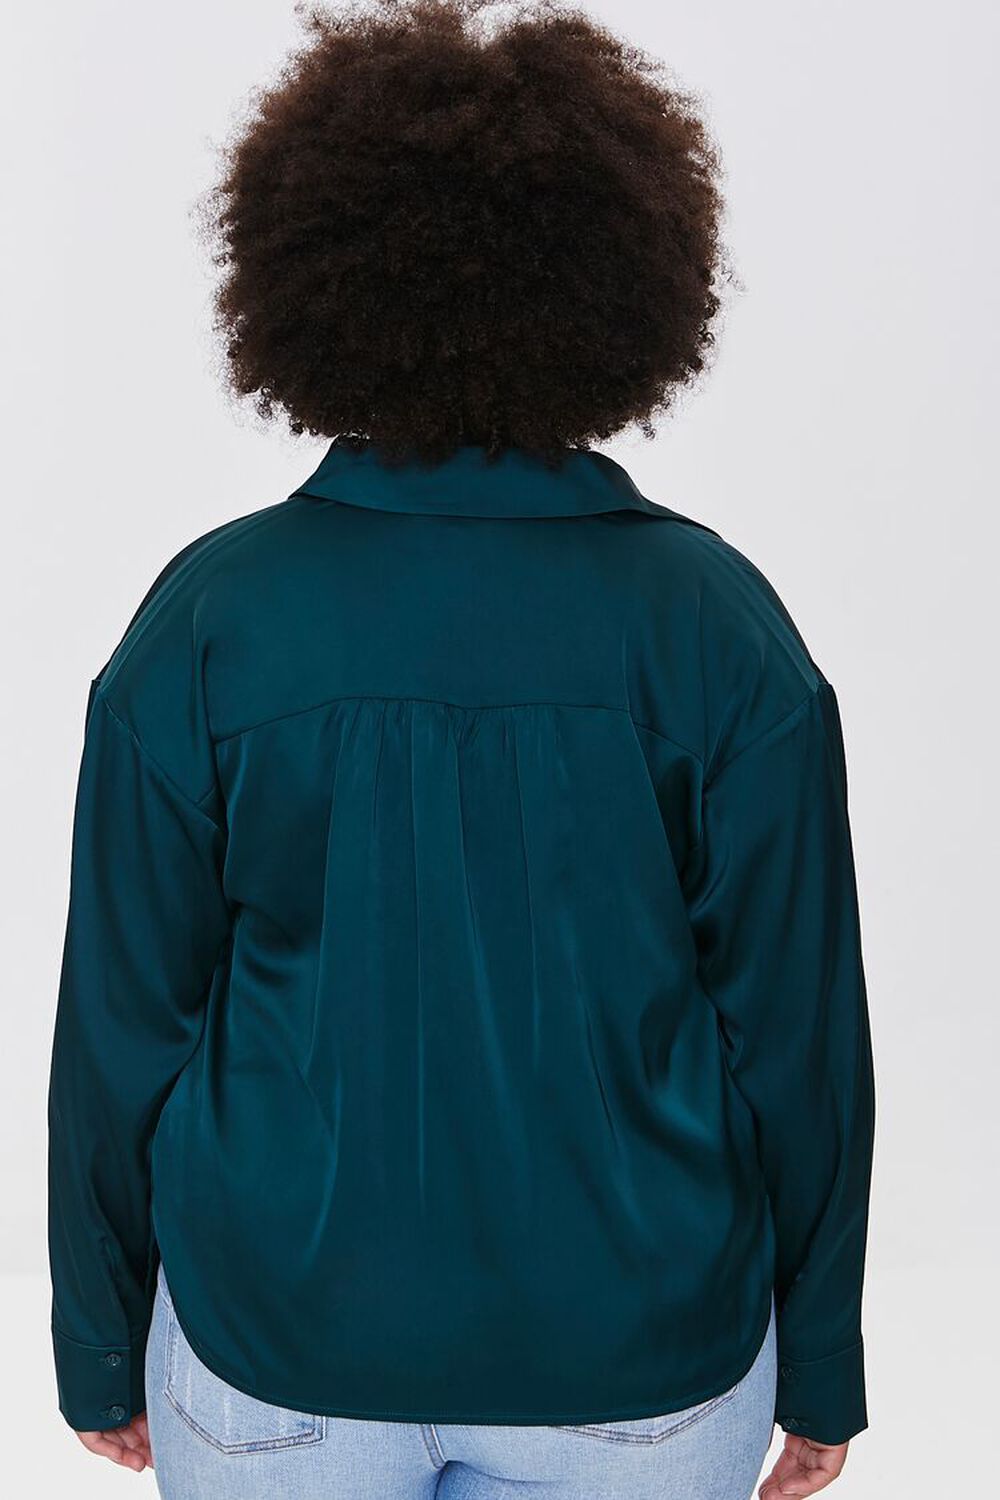 HUNTER GREEN Plus Size Satin Shirt, image 3